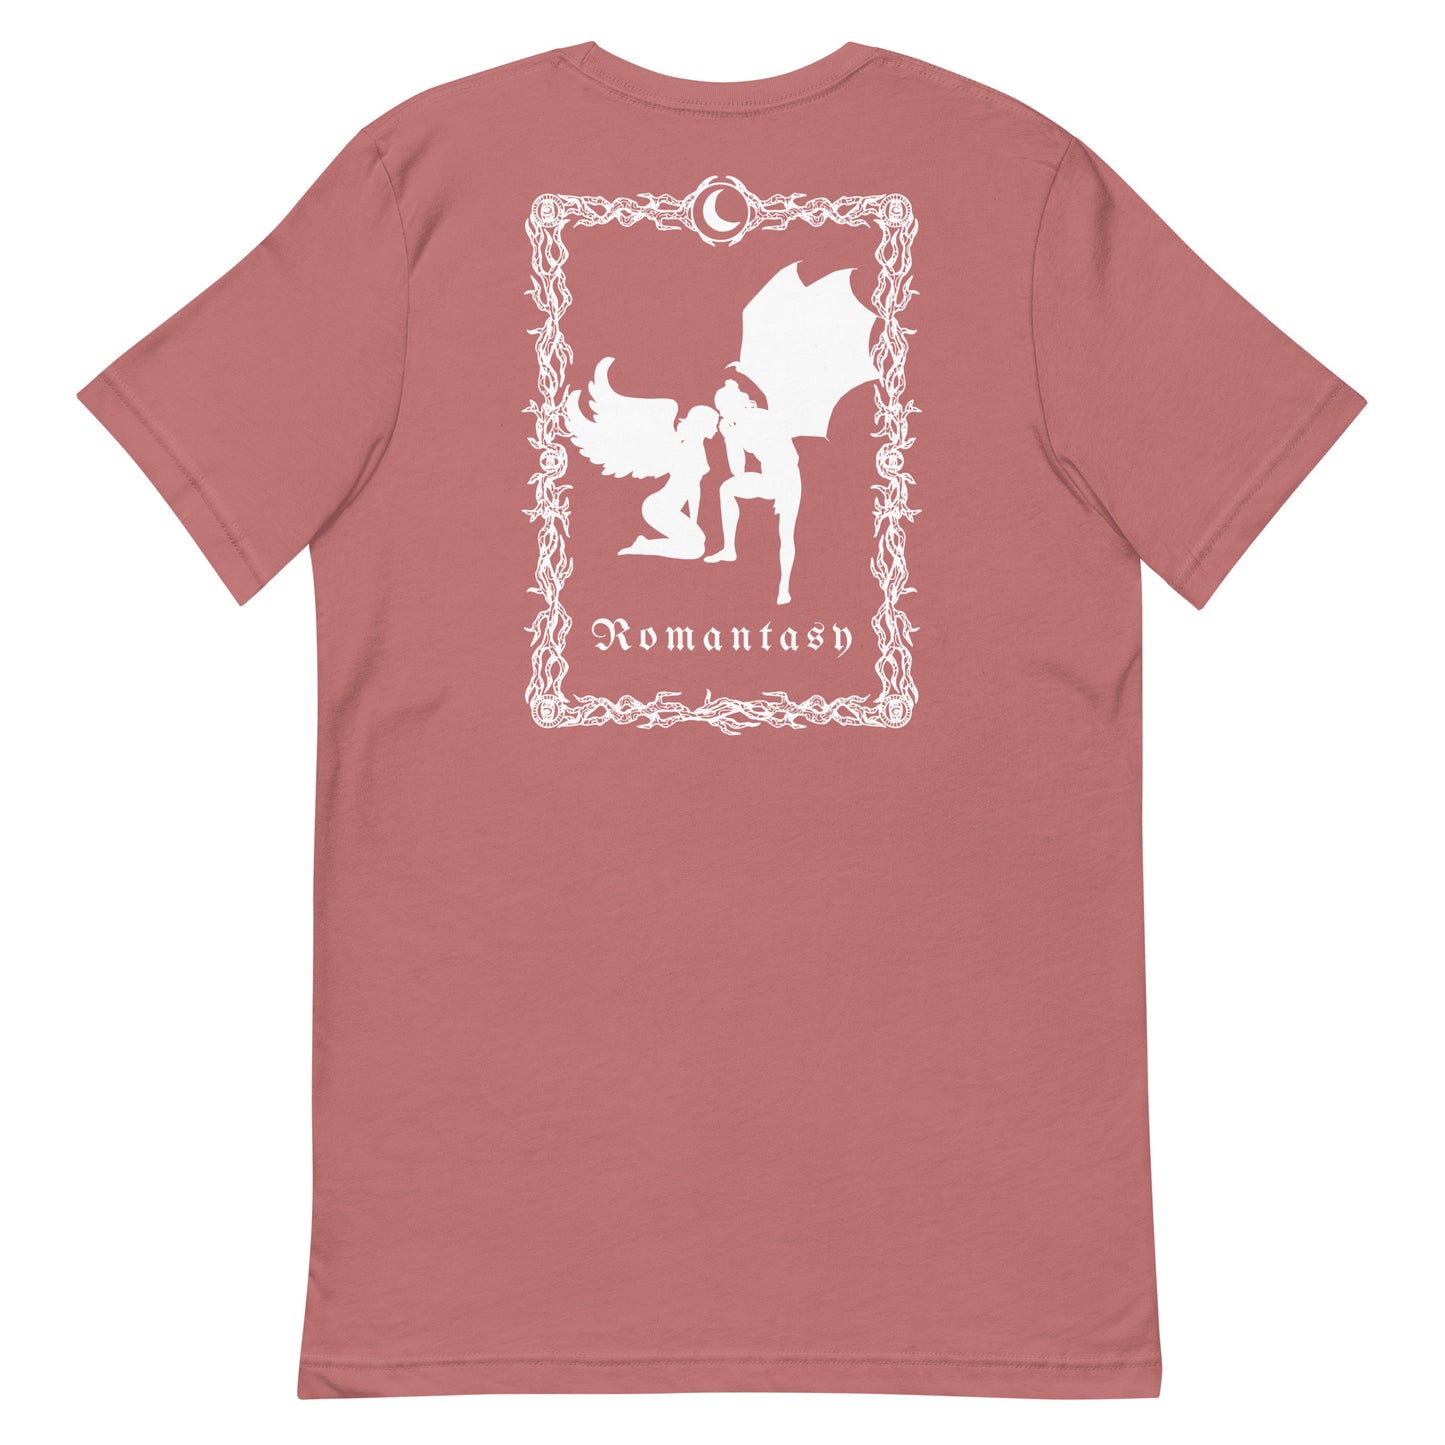 Back side- Romantasy Romance Fantasy Book Tee T-shirt